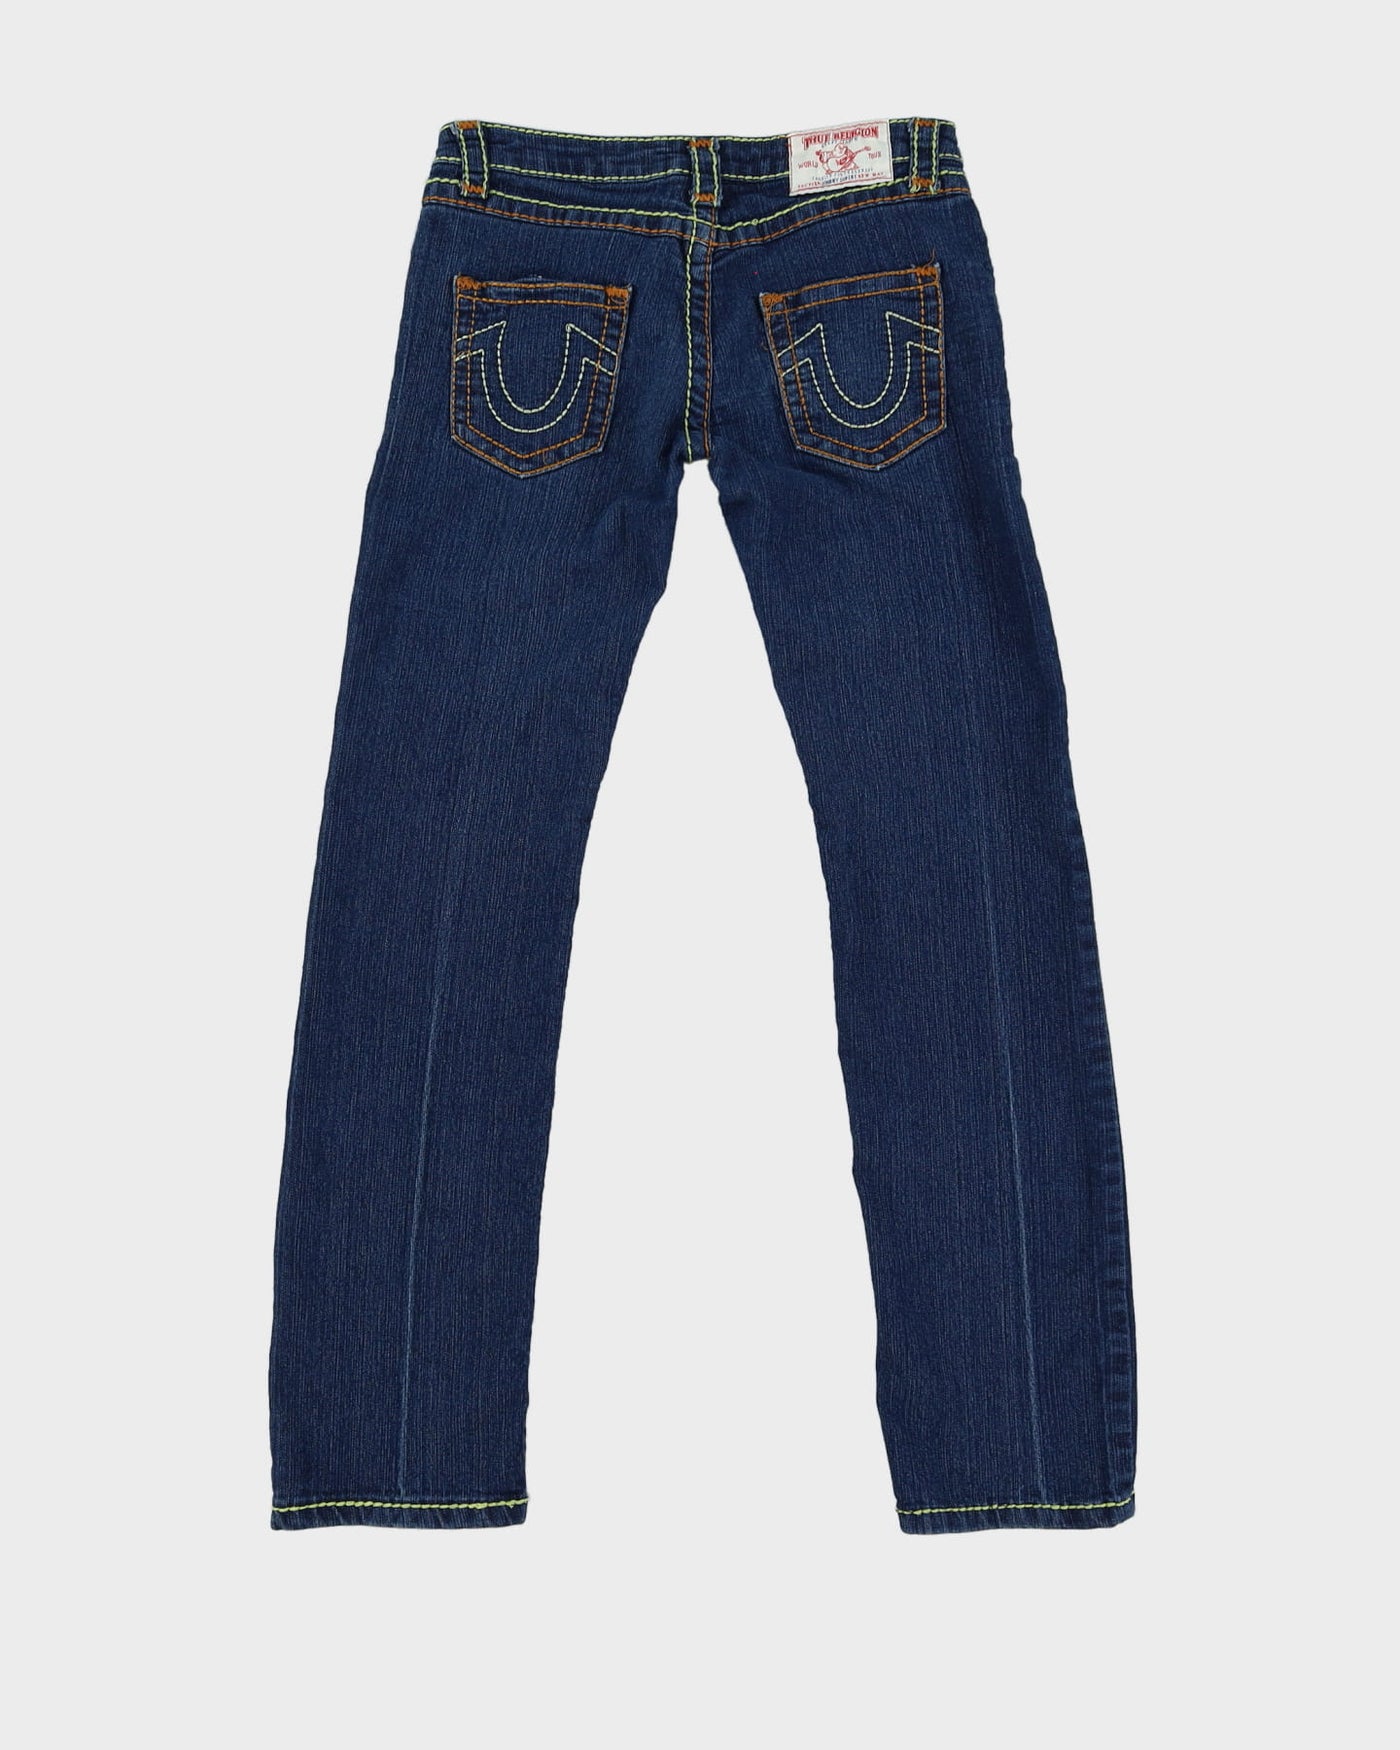 00s True Religion Contrast Stitch Dark Wash Blue Jeans - W28 L30